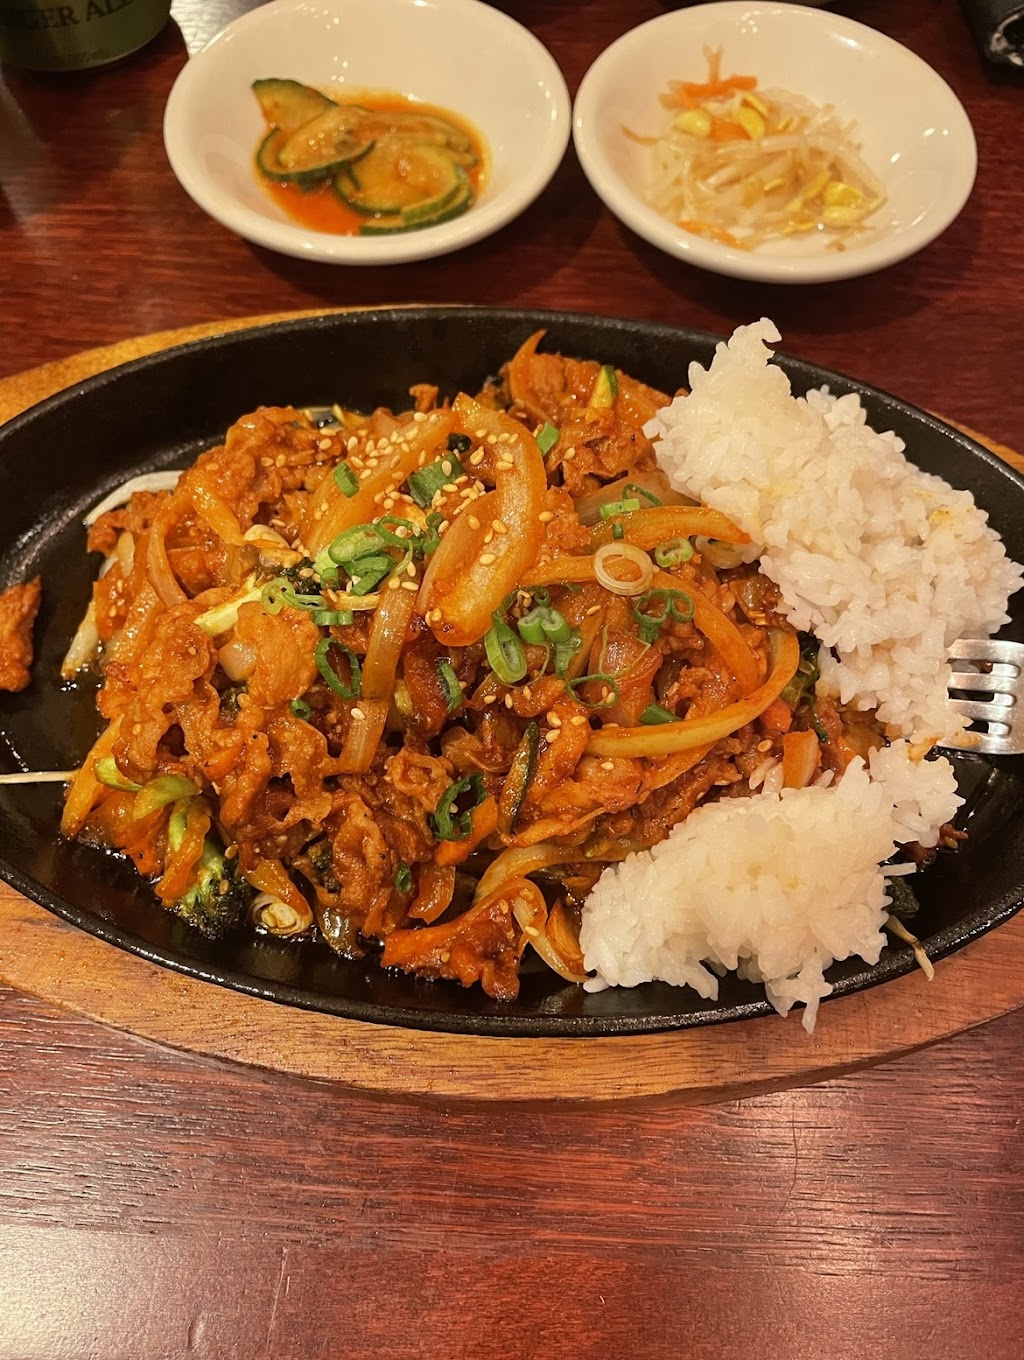 Gohyang Korean Restaurant | 113 Russell St, Hadley, MA 01035 | Phone: (413) 586-8848